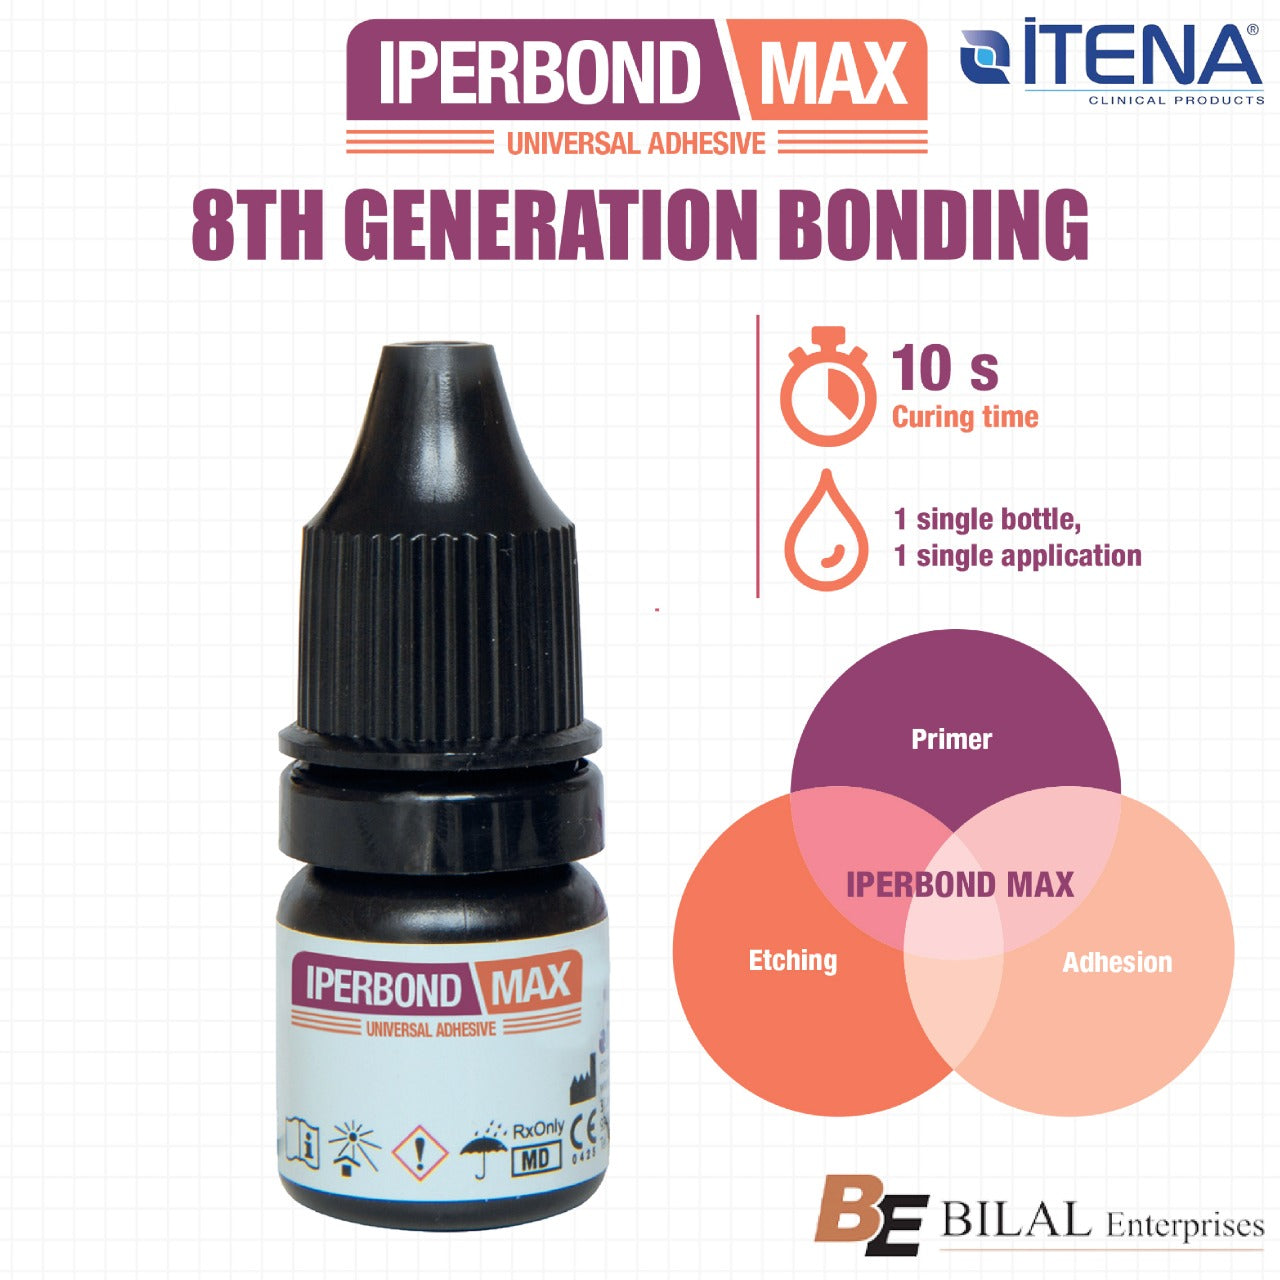 Itena Clinical - Iperbond Max (8th Generation Universal Adhesive)